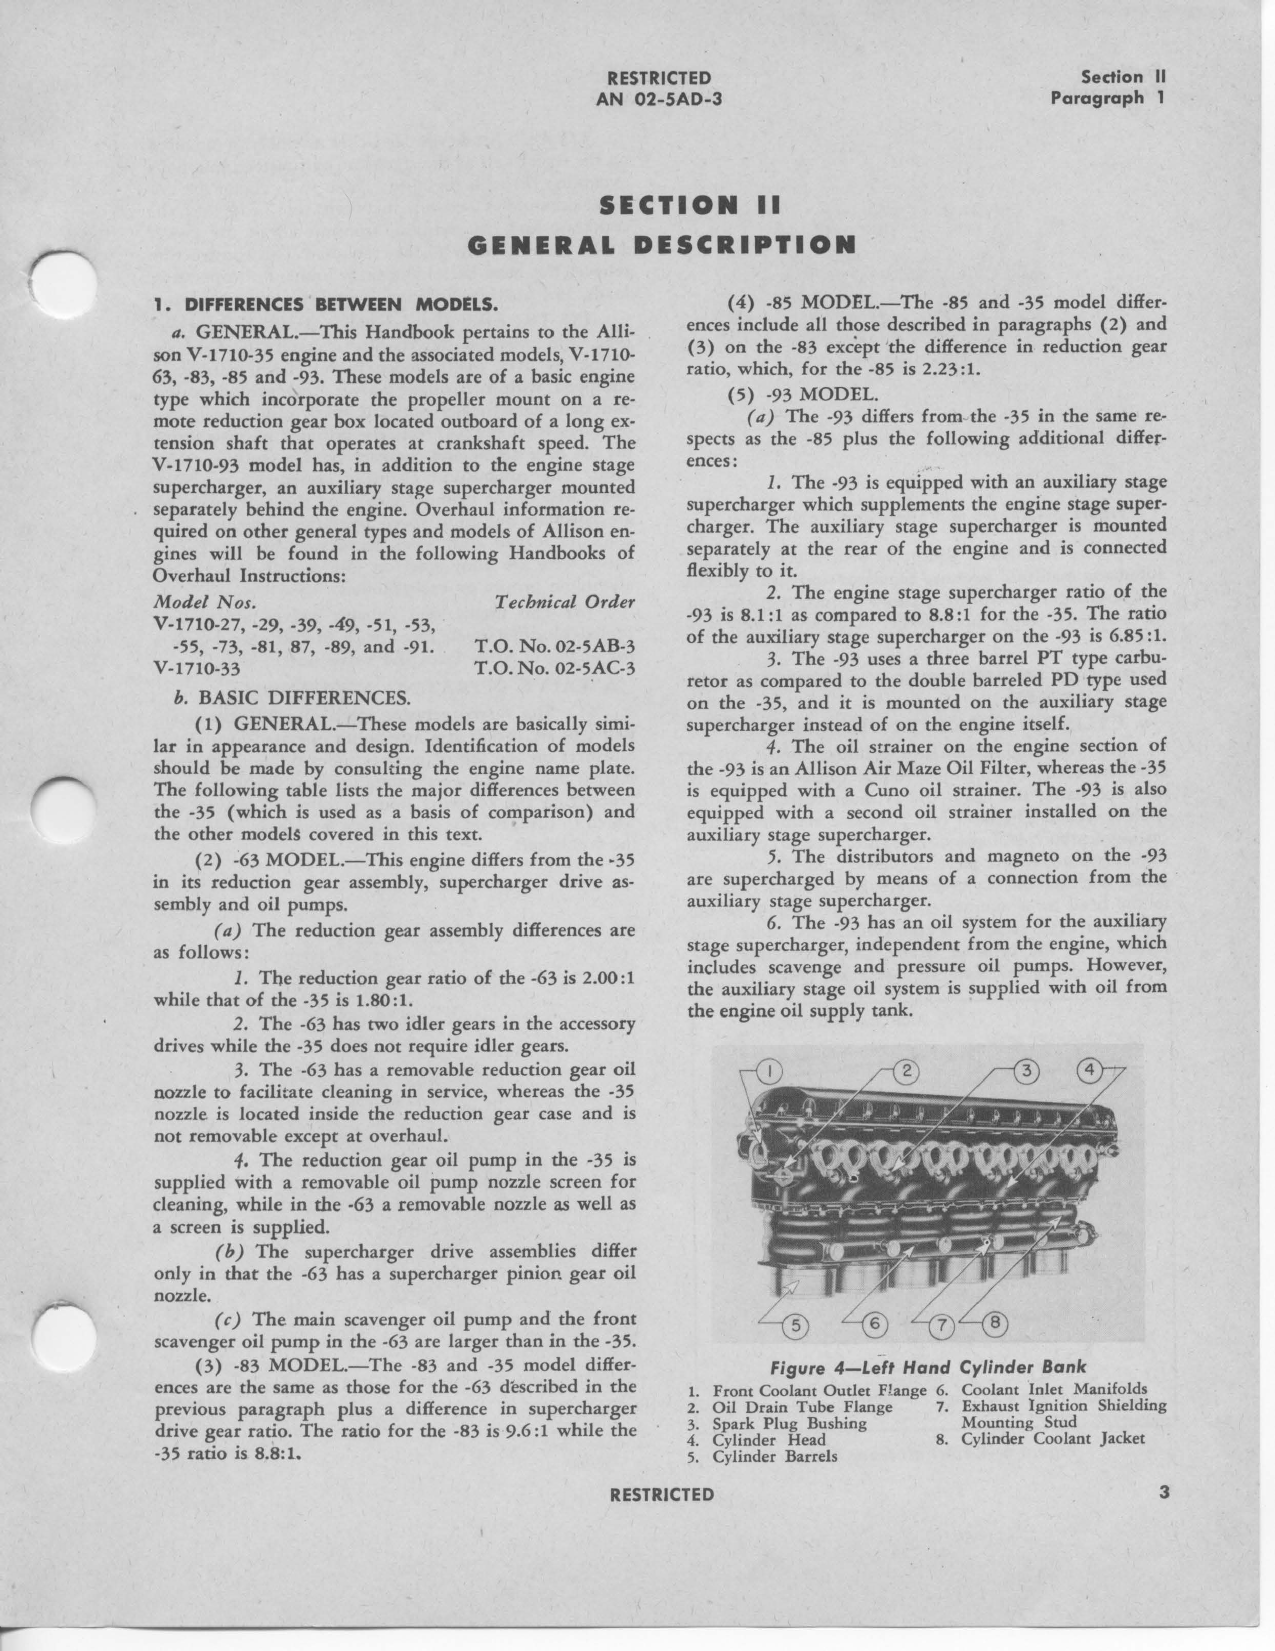 Sample page 9 from AirCorps Library document: Overhaul Instructions for V-1710-35, V-1710-63, V-1710-83, V-1710-85 and V-1710-93